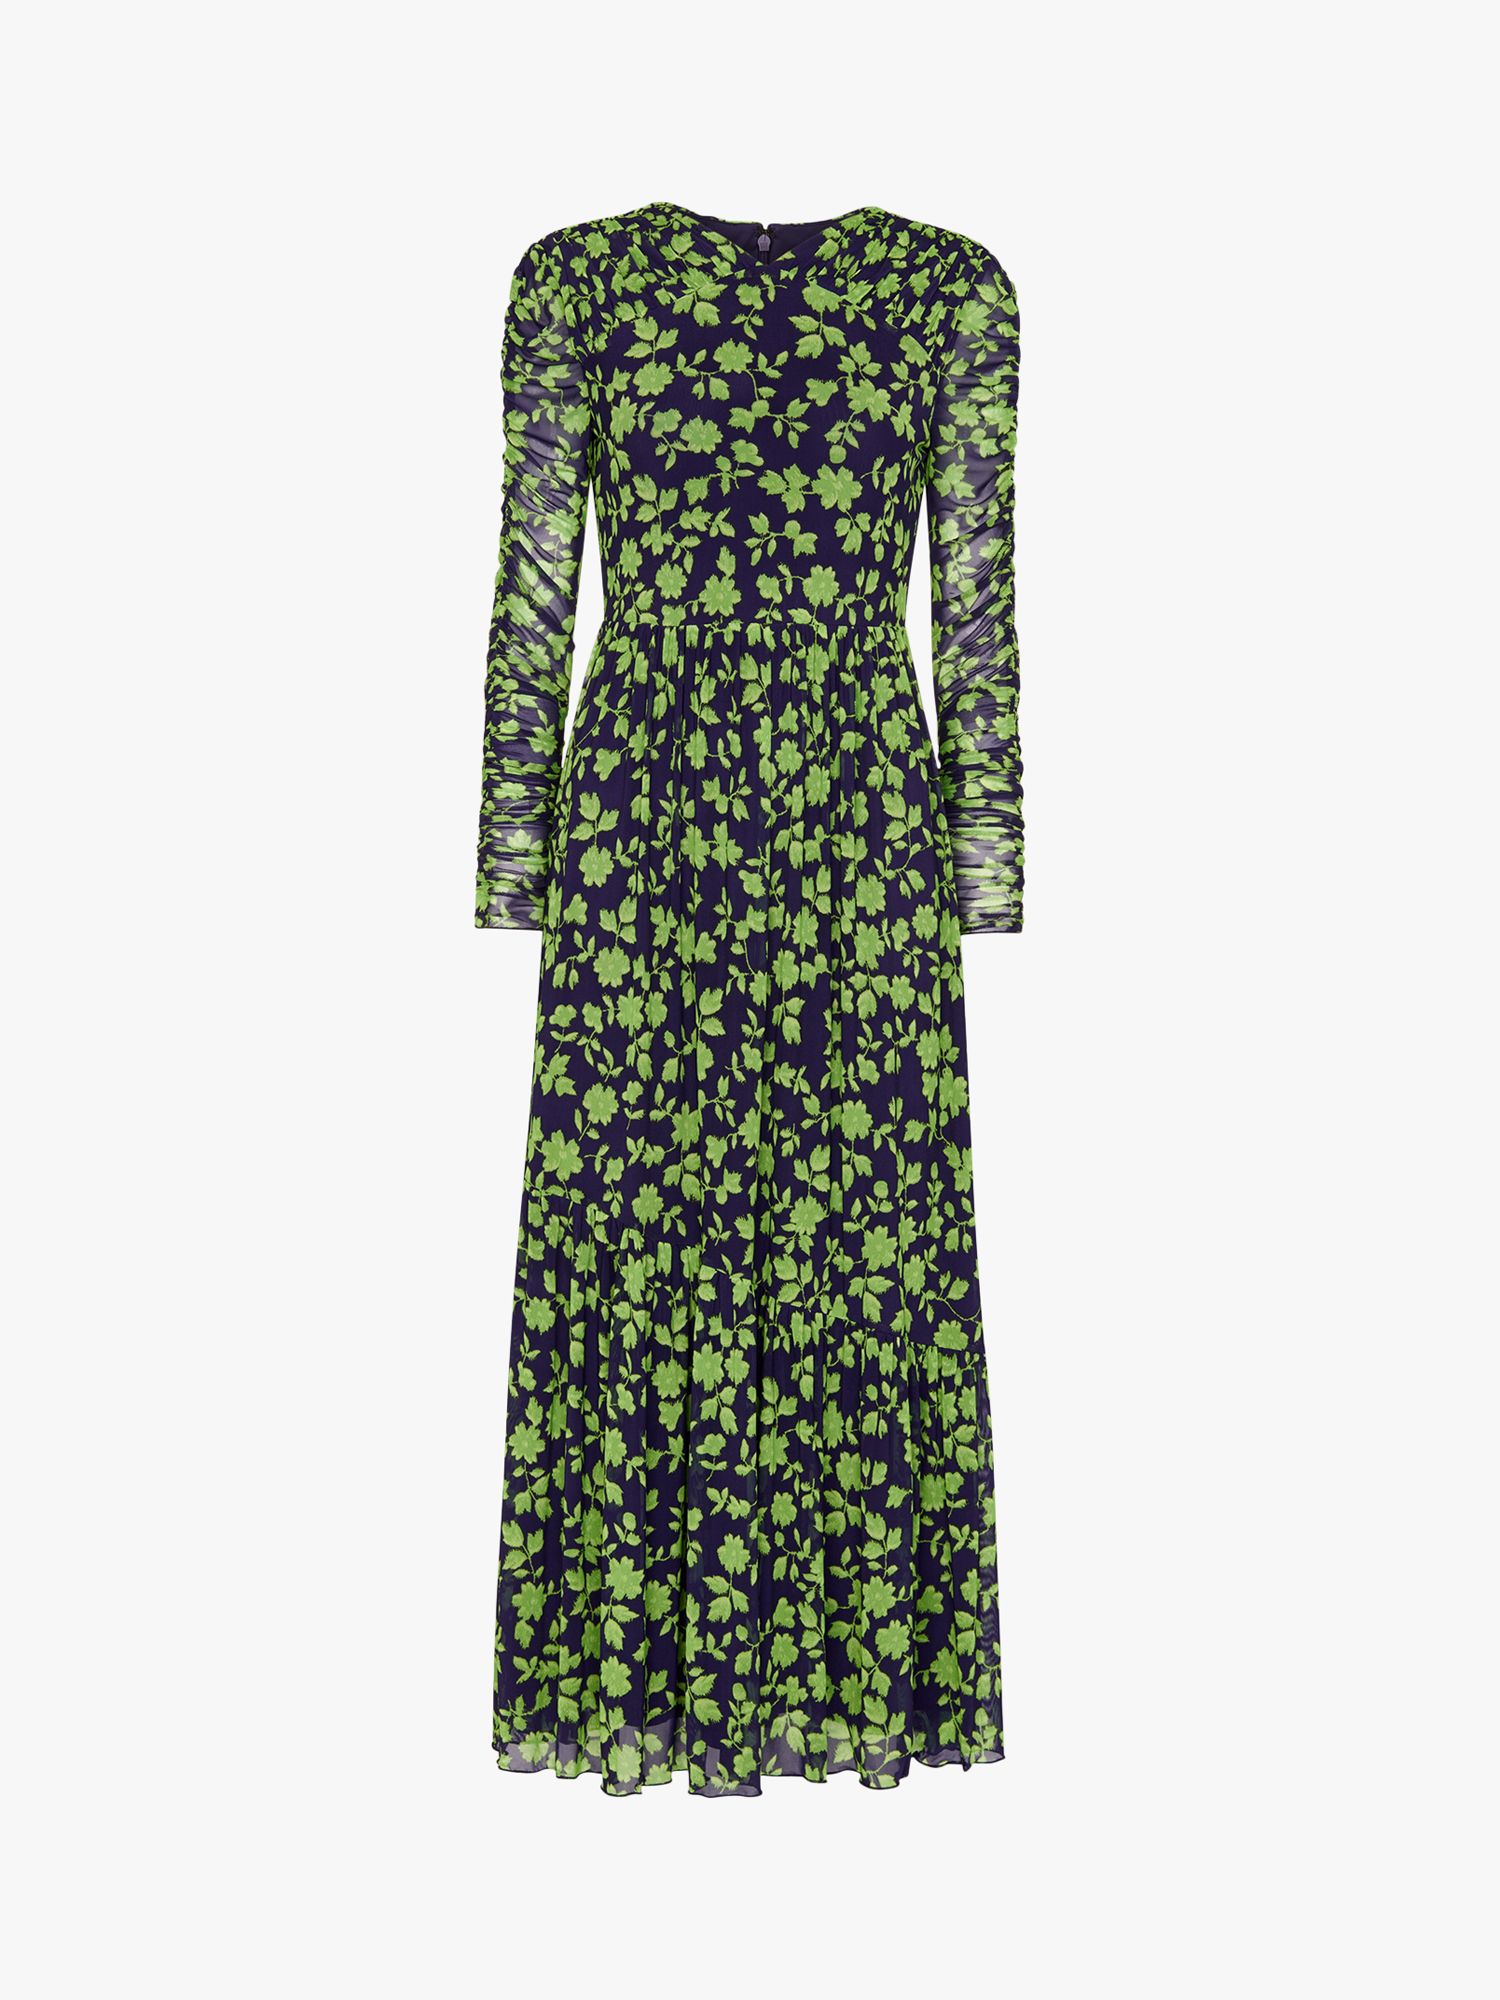 Whistles Linear Floral Mesh Dress, Green/Multi at John Lewis & Partners